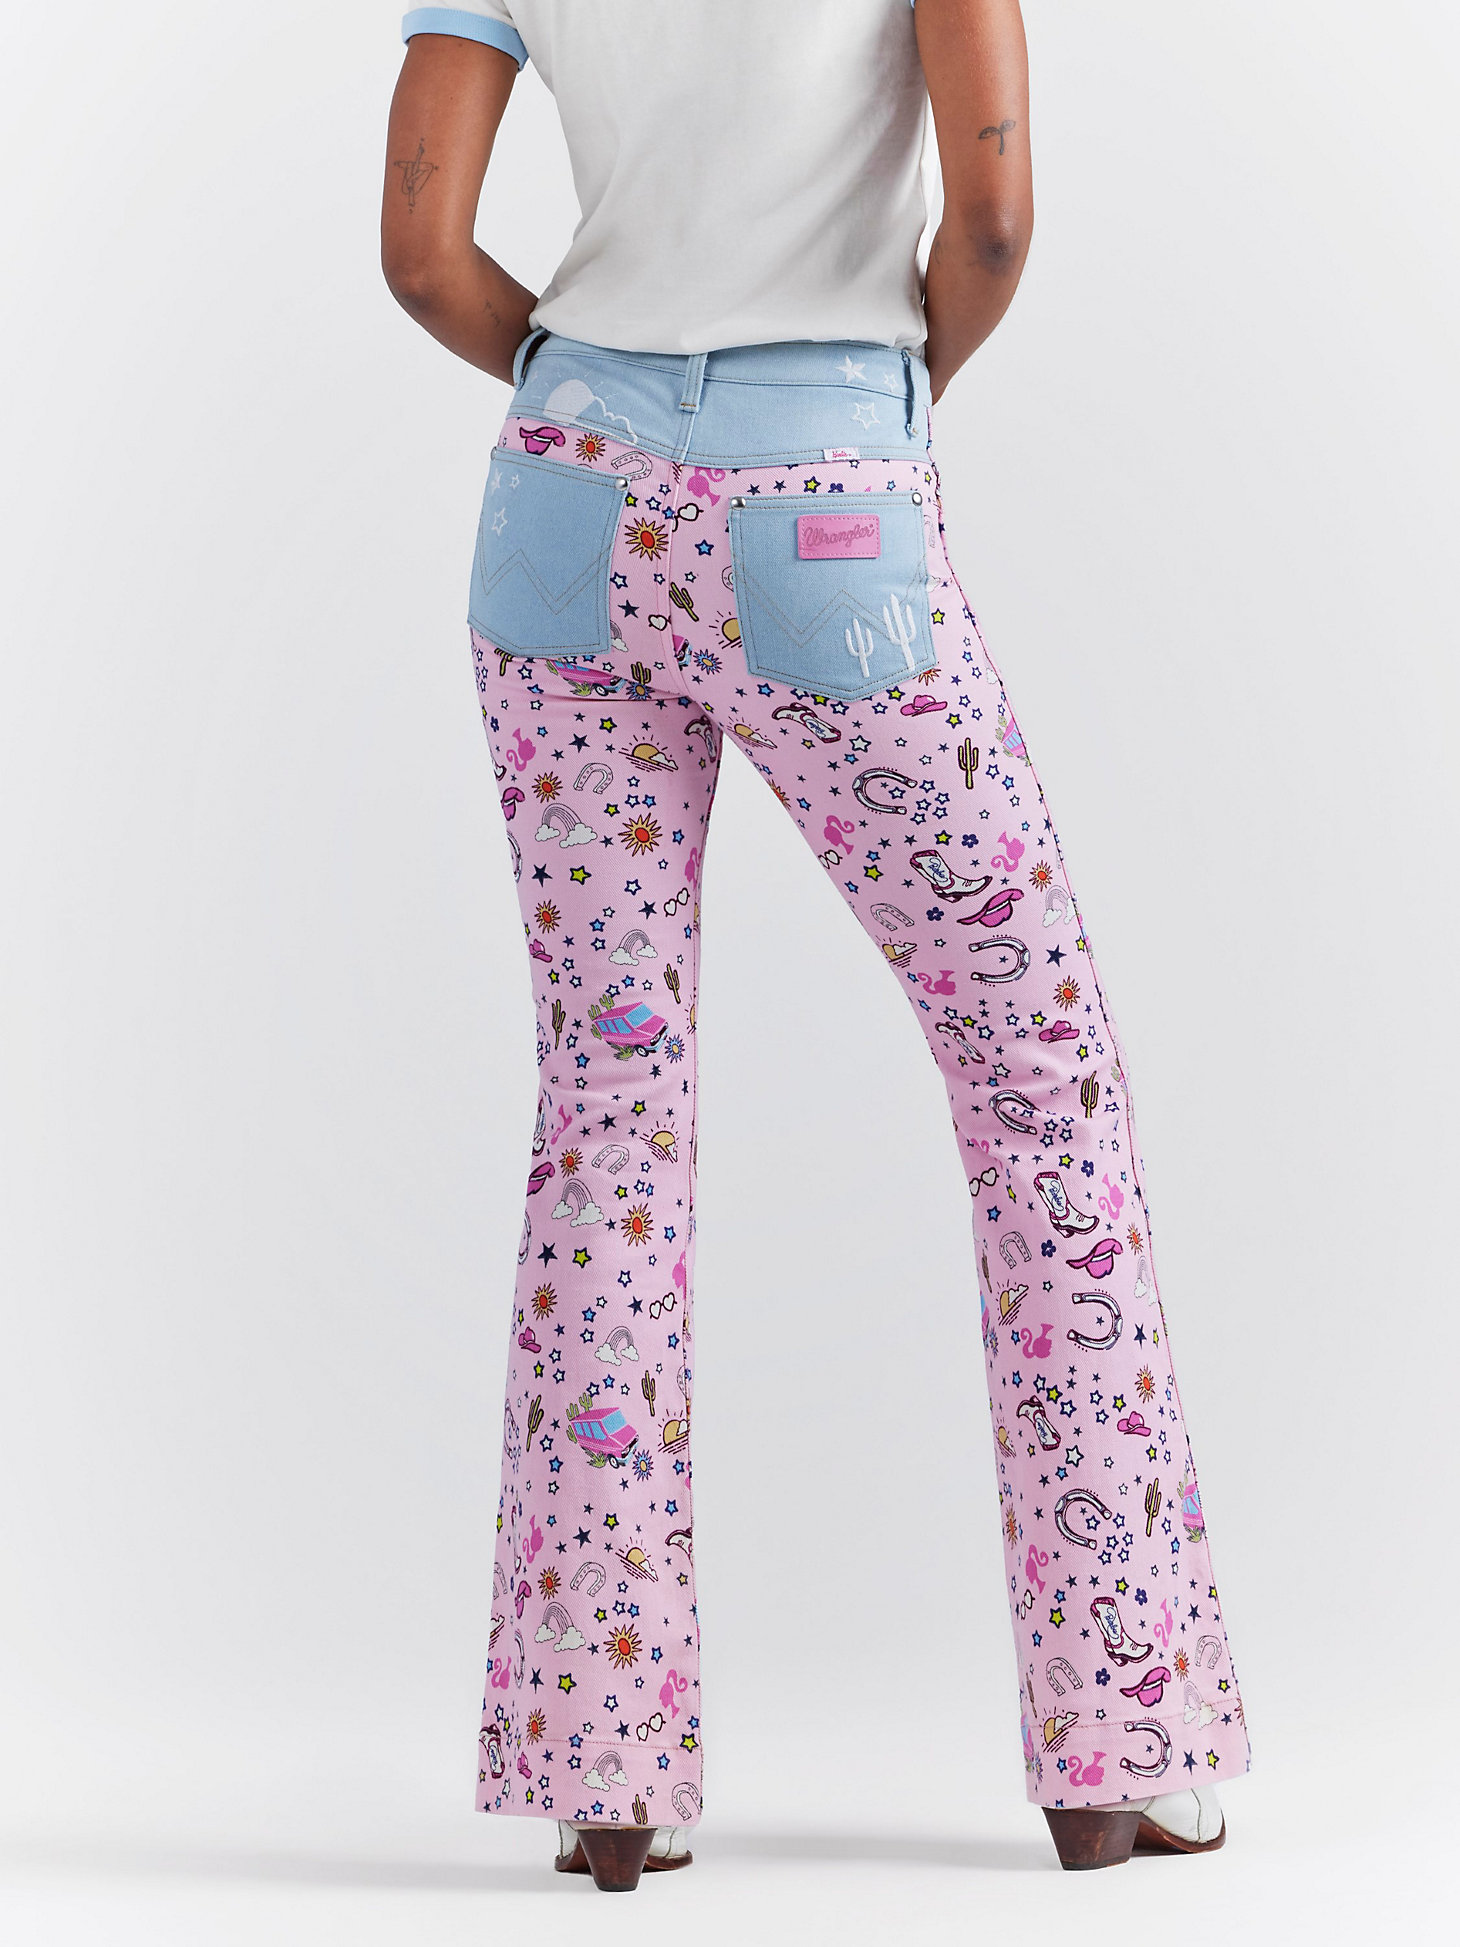 Wrangler x Barbie™ Retro High Rise Trouser Jean in Pinnacle Pink alternative view 4